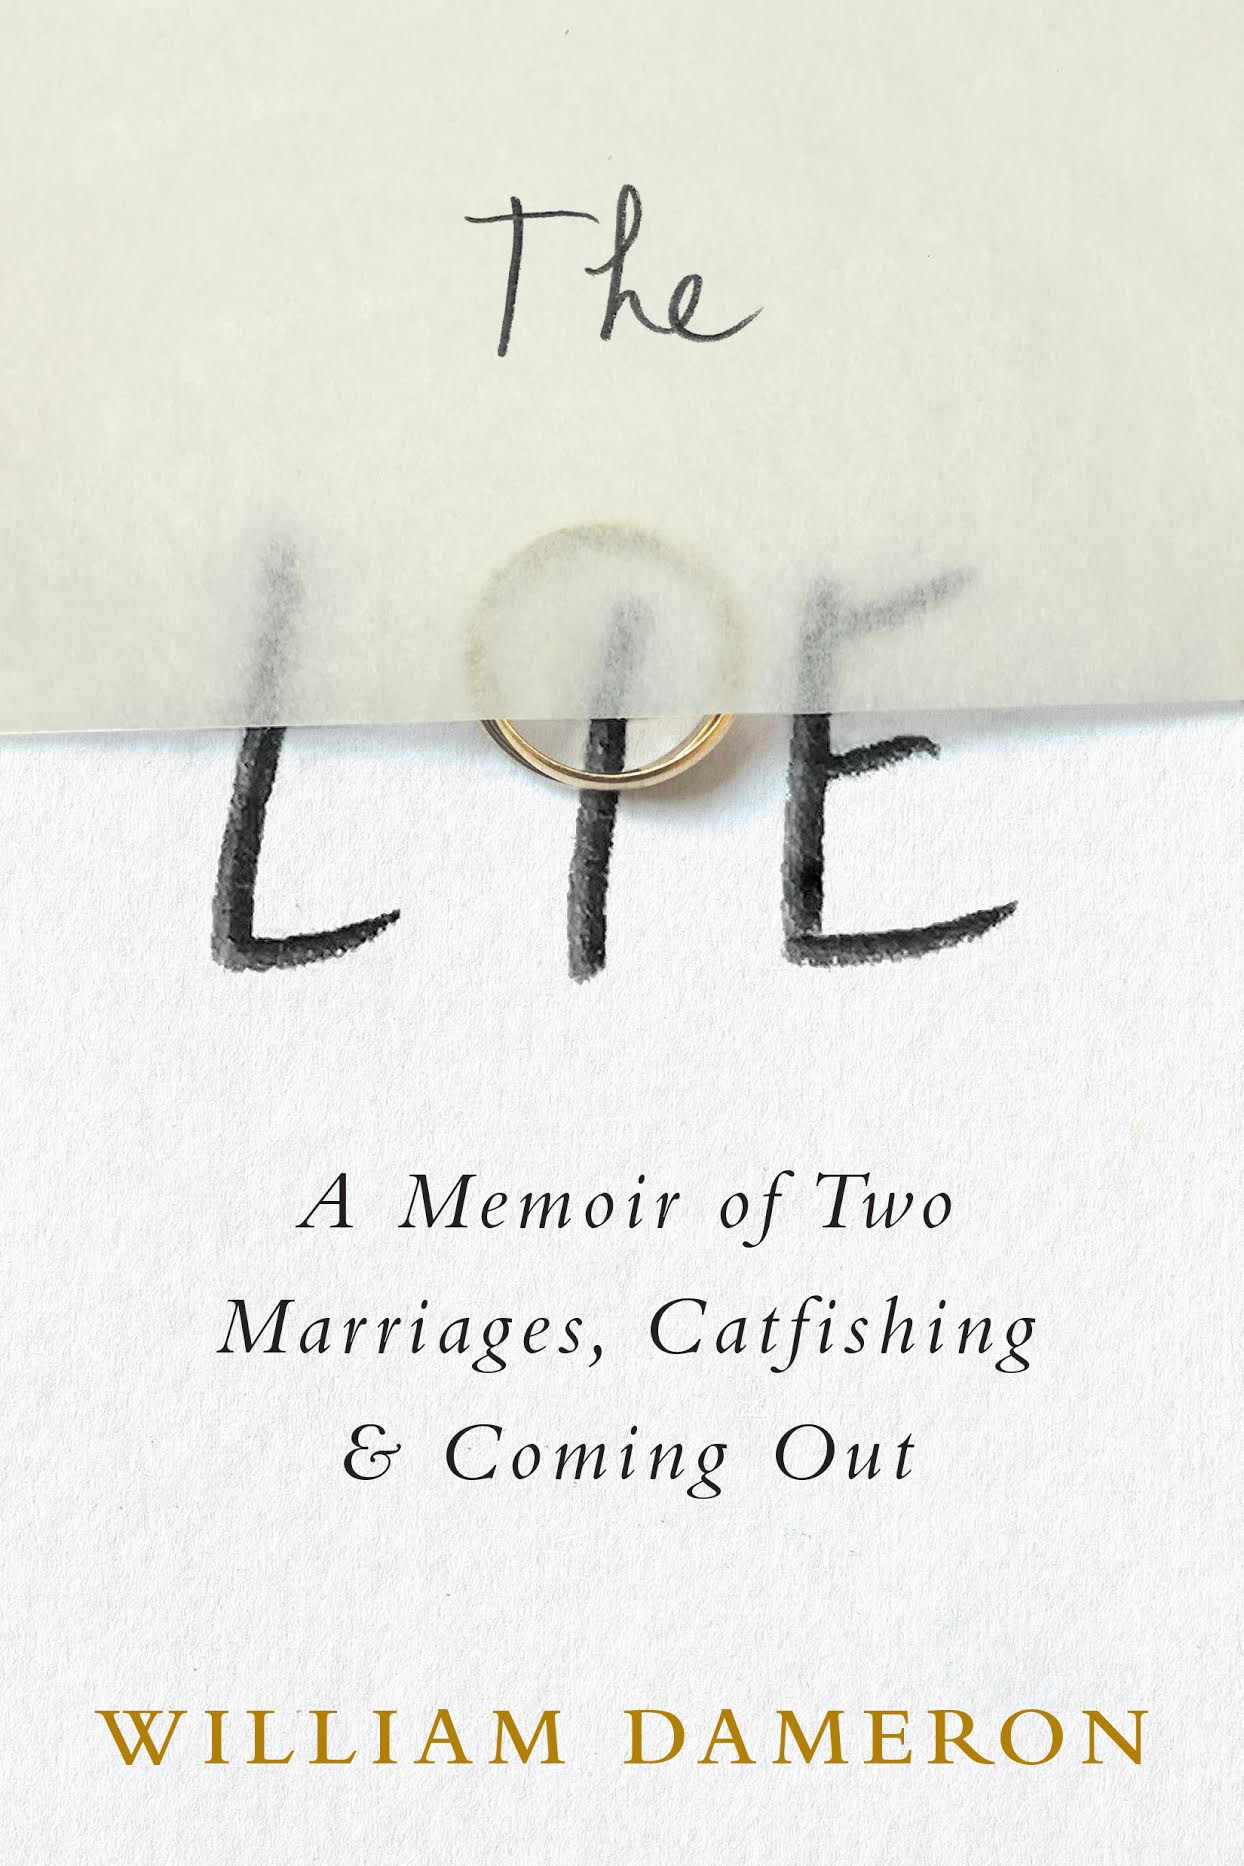 Book Launch: The Lie by William Dameron in conversation with Garrard Conley